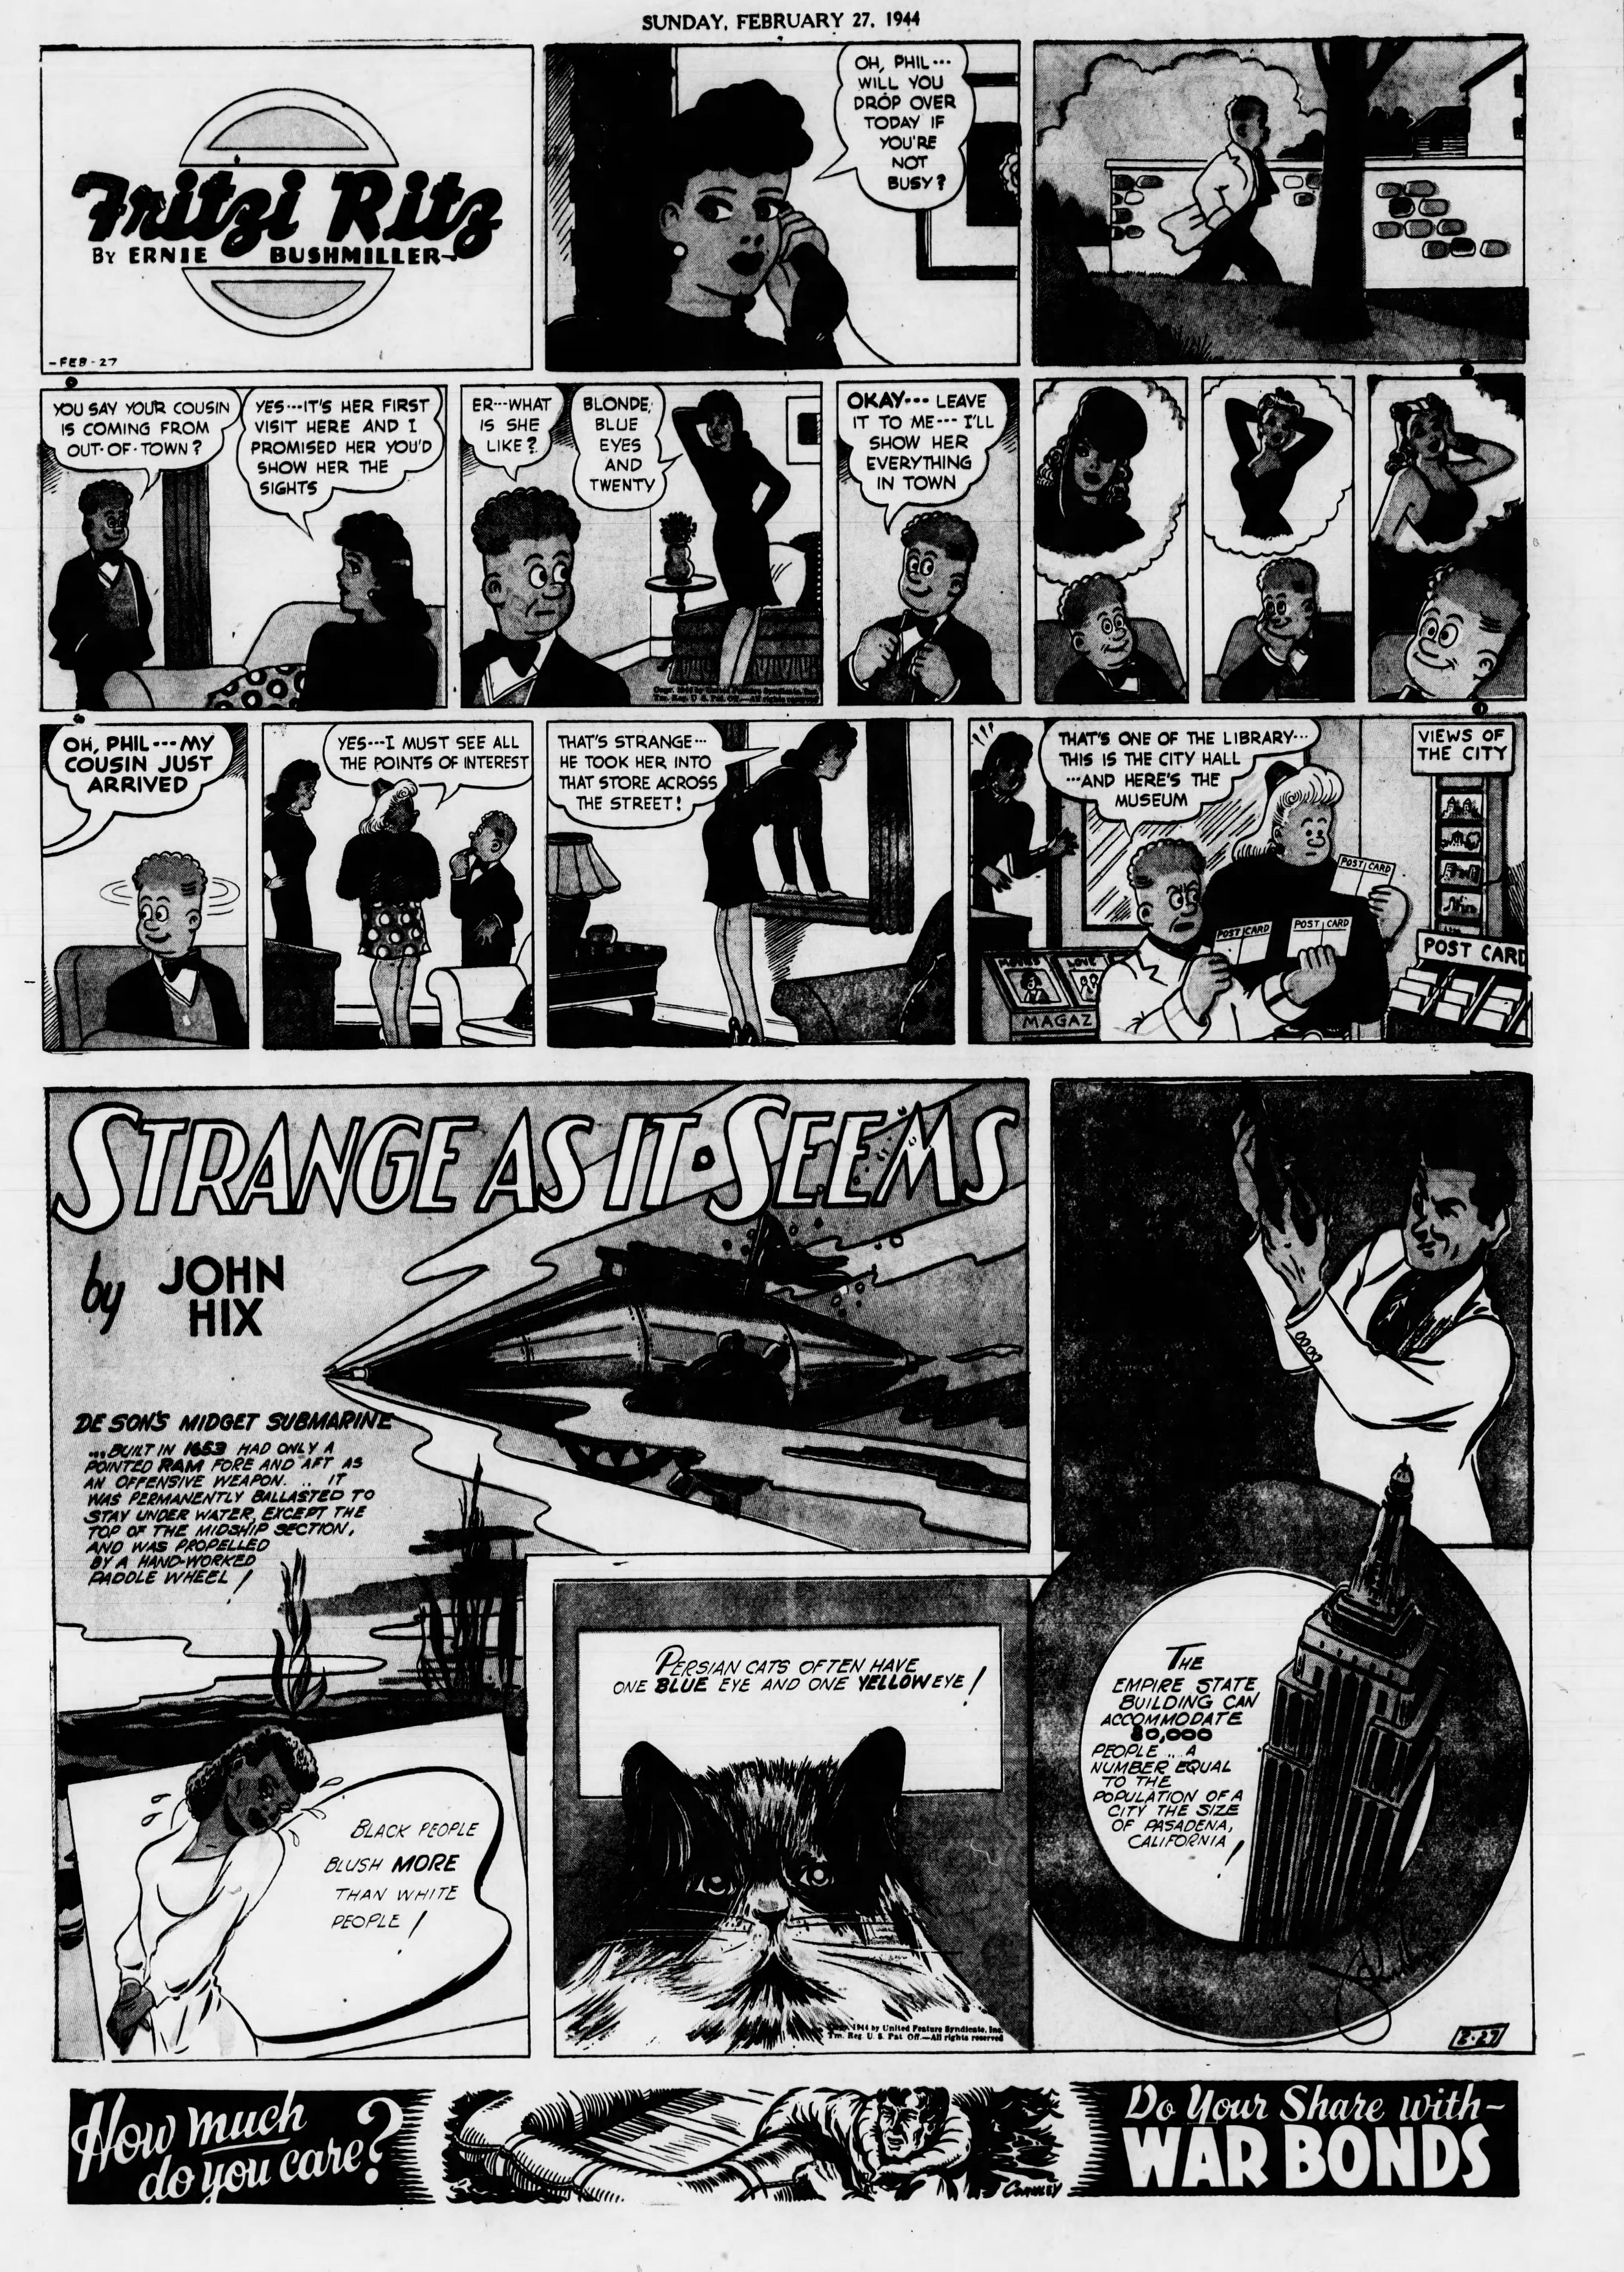 The_Brooklyn_Daily_Eagle_Sun__Feb_27__1944_(9).jpg